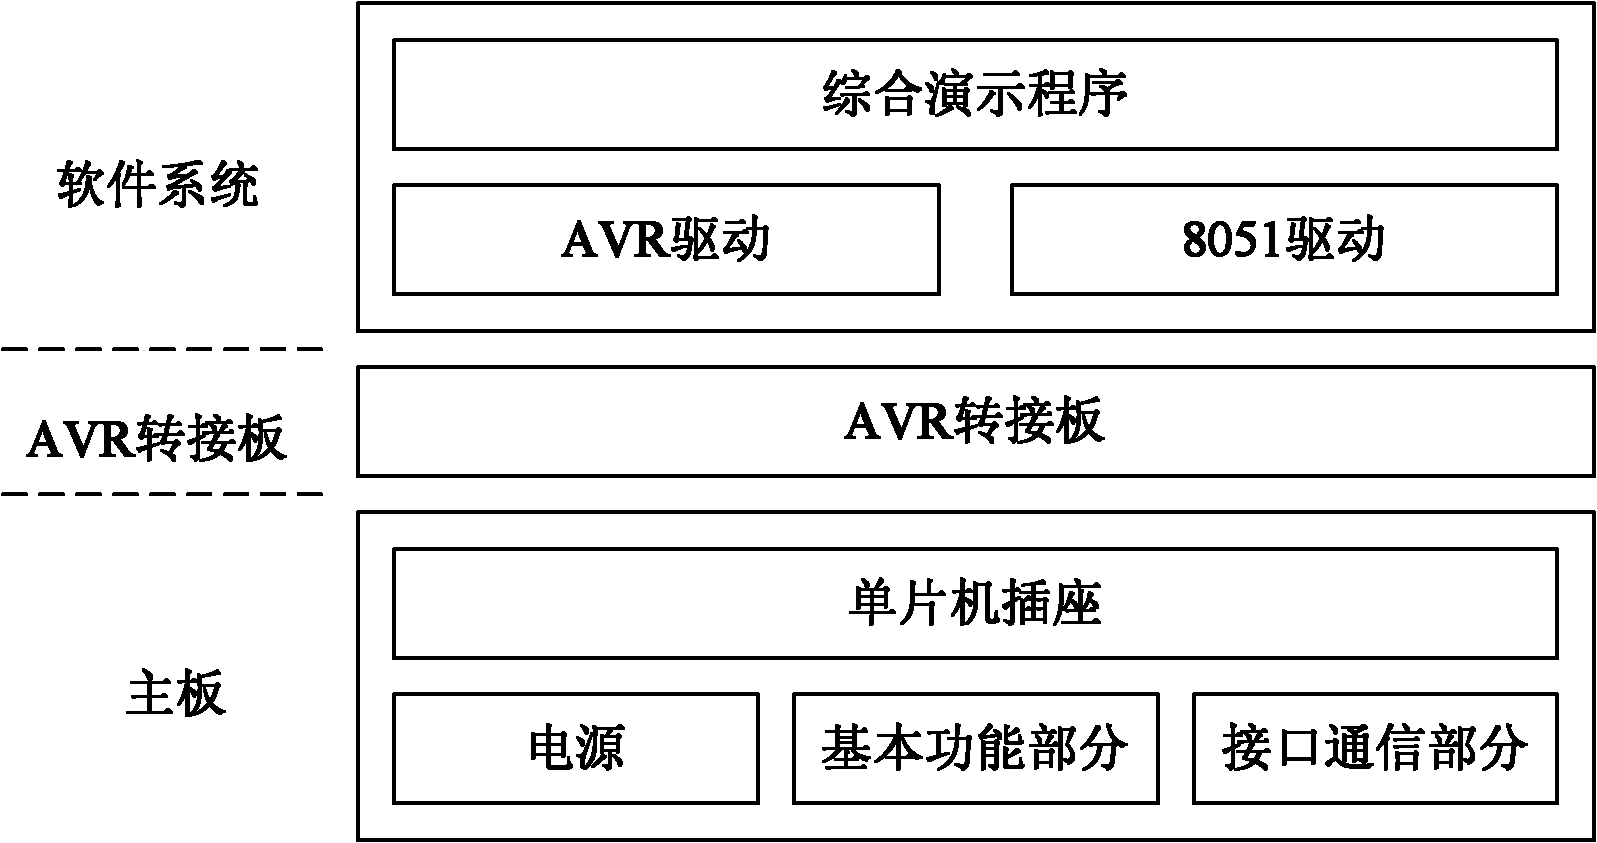 8051-or-AVR-based multi-core singlechip teaching experimental platform